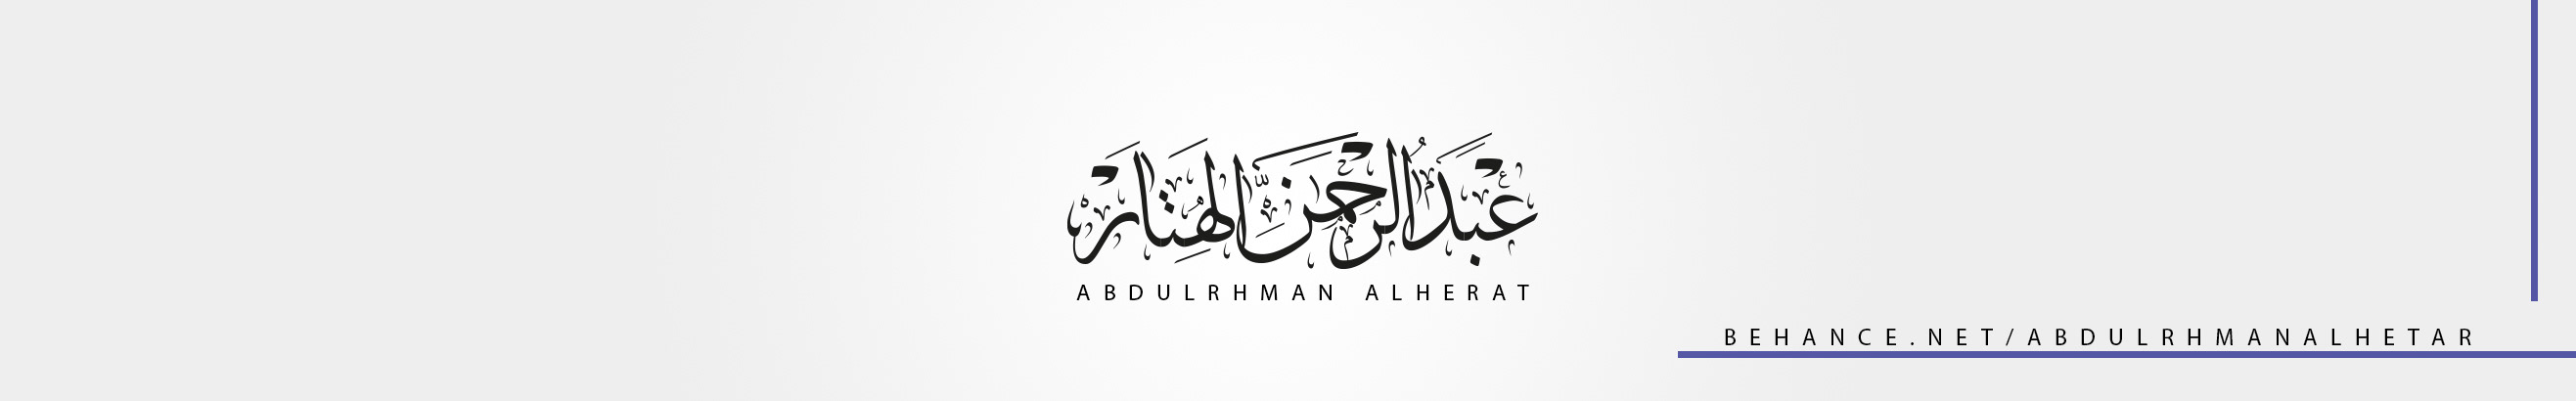 Abdulrahman Alhetar ✪'s profile banner